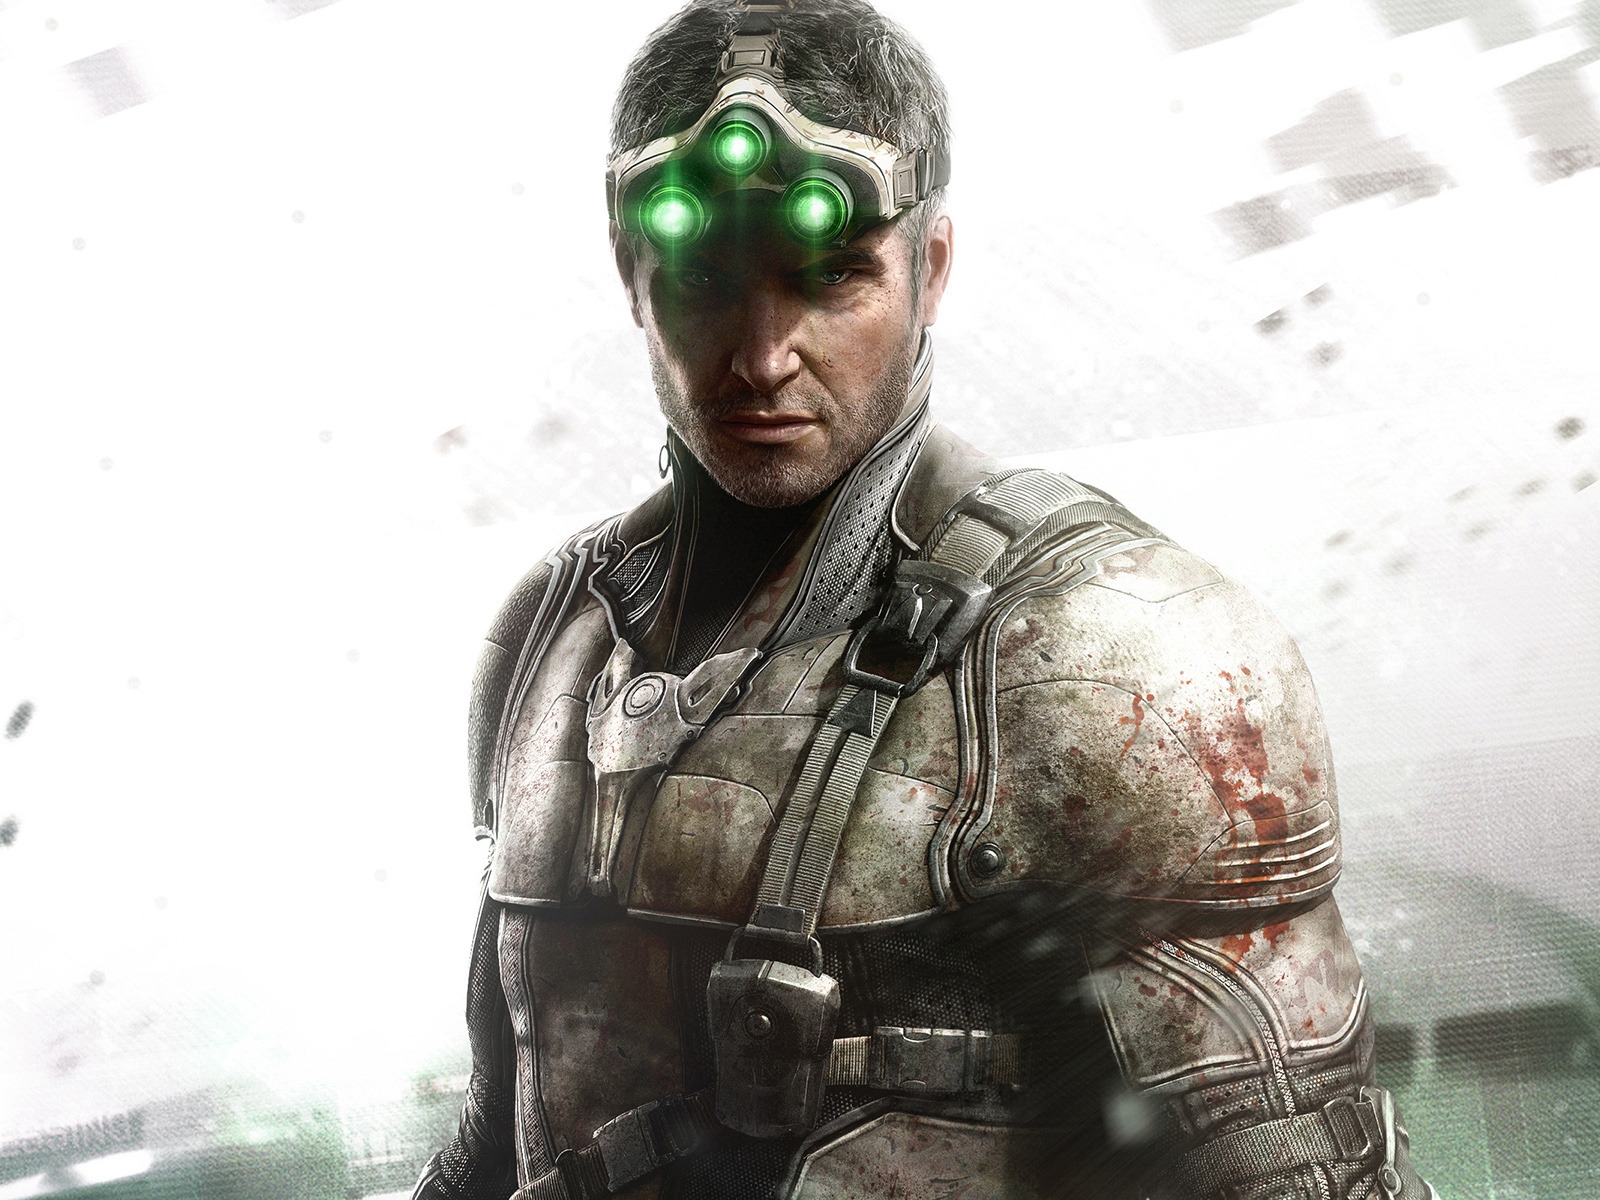 Splinter Cell Blacklist Video Game for 1600 x 1200 resolution